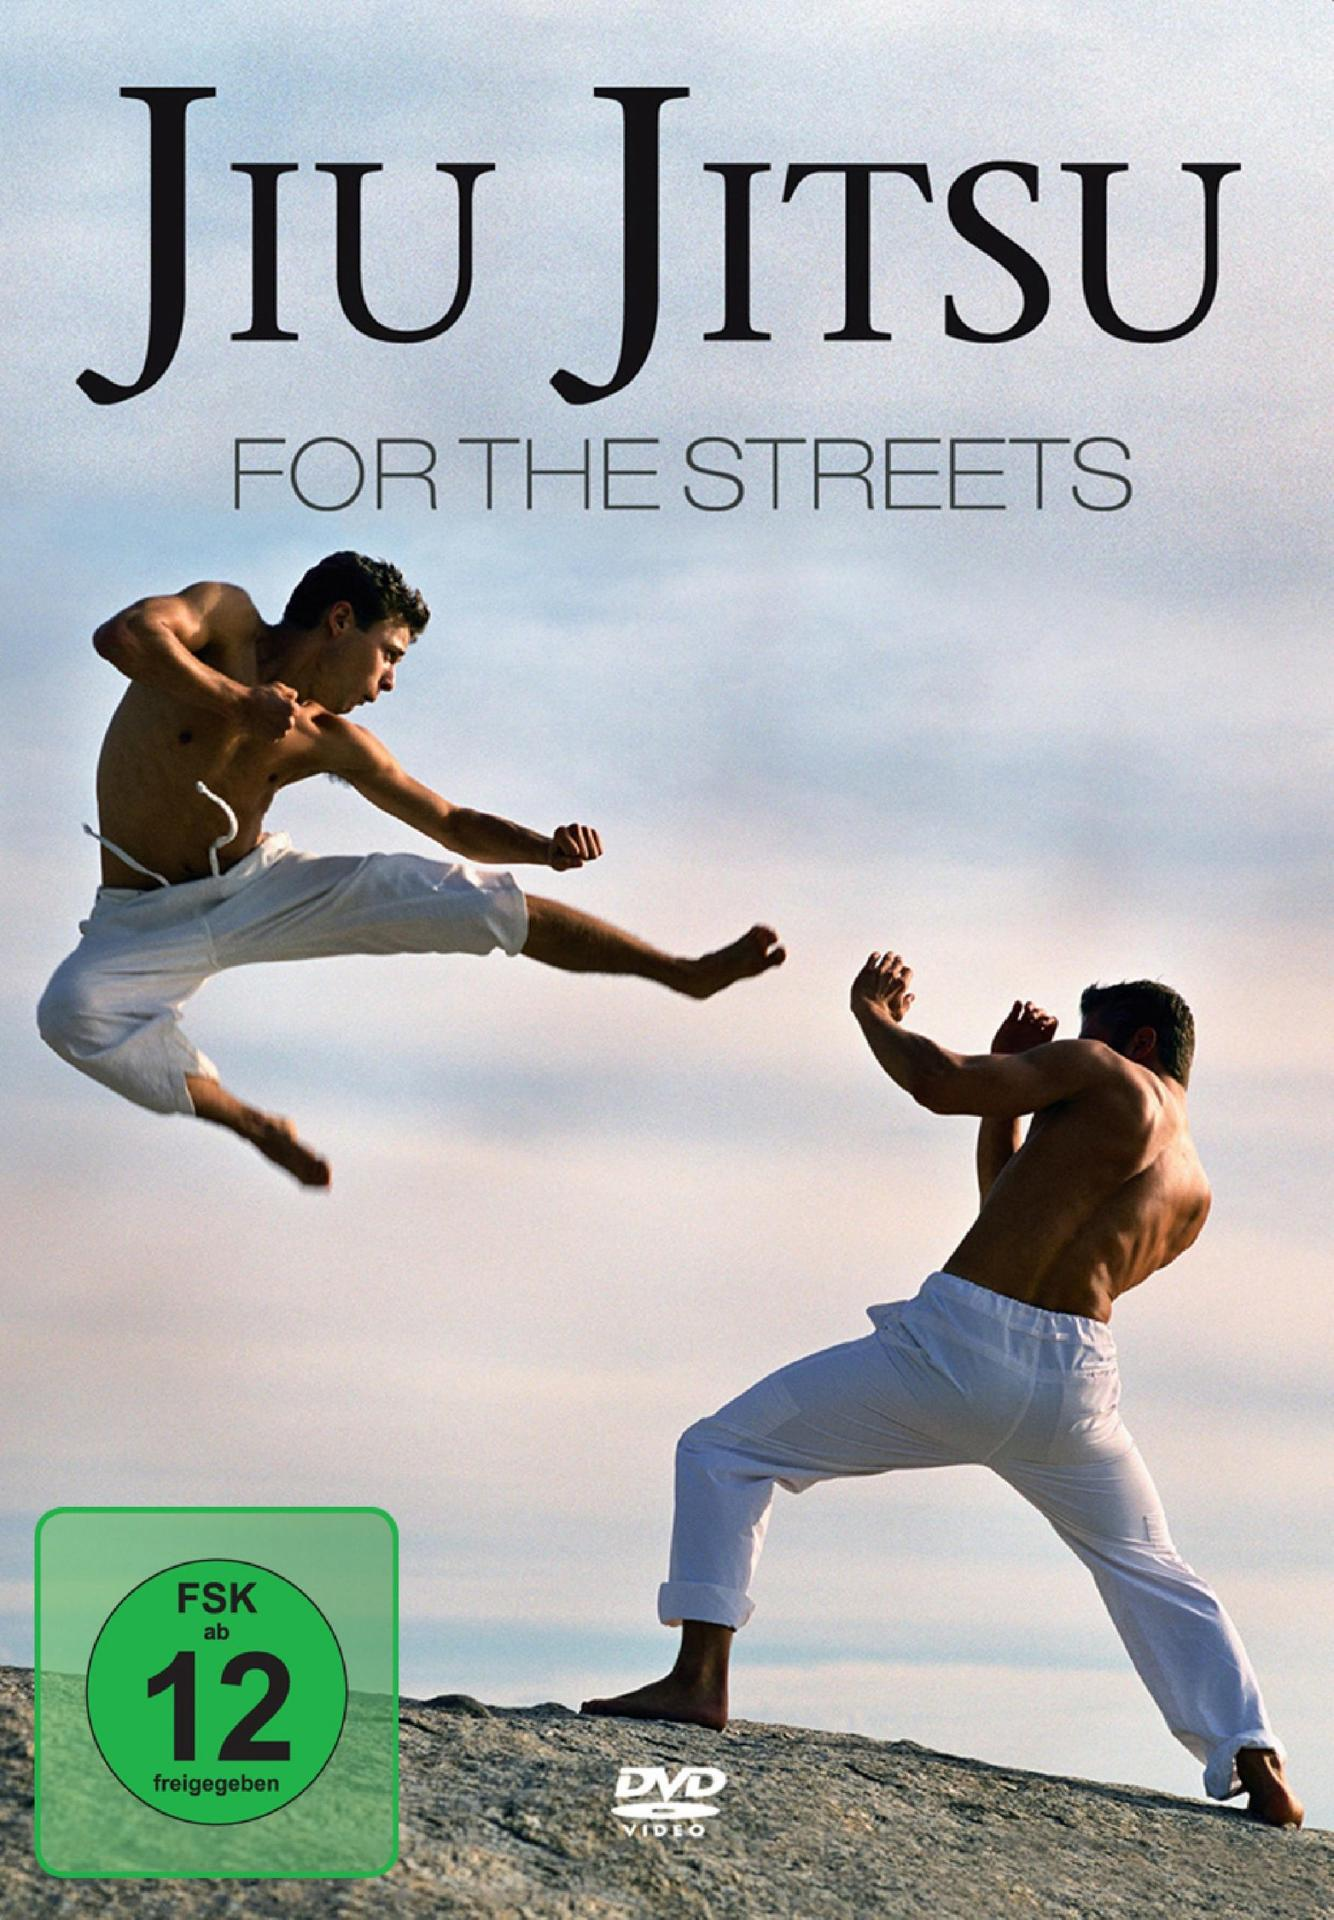 the Street Jitsu for Jiu DVD